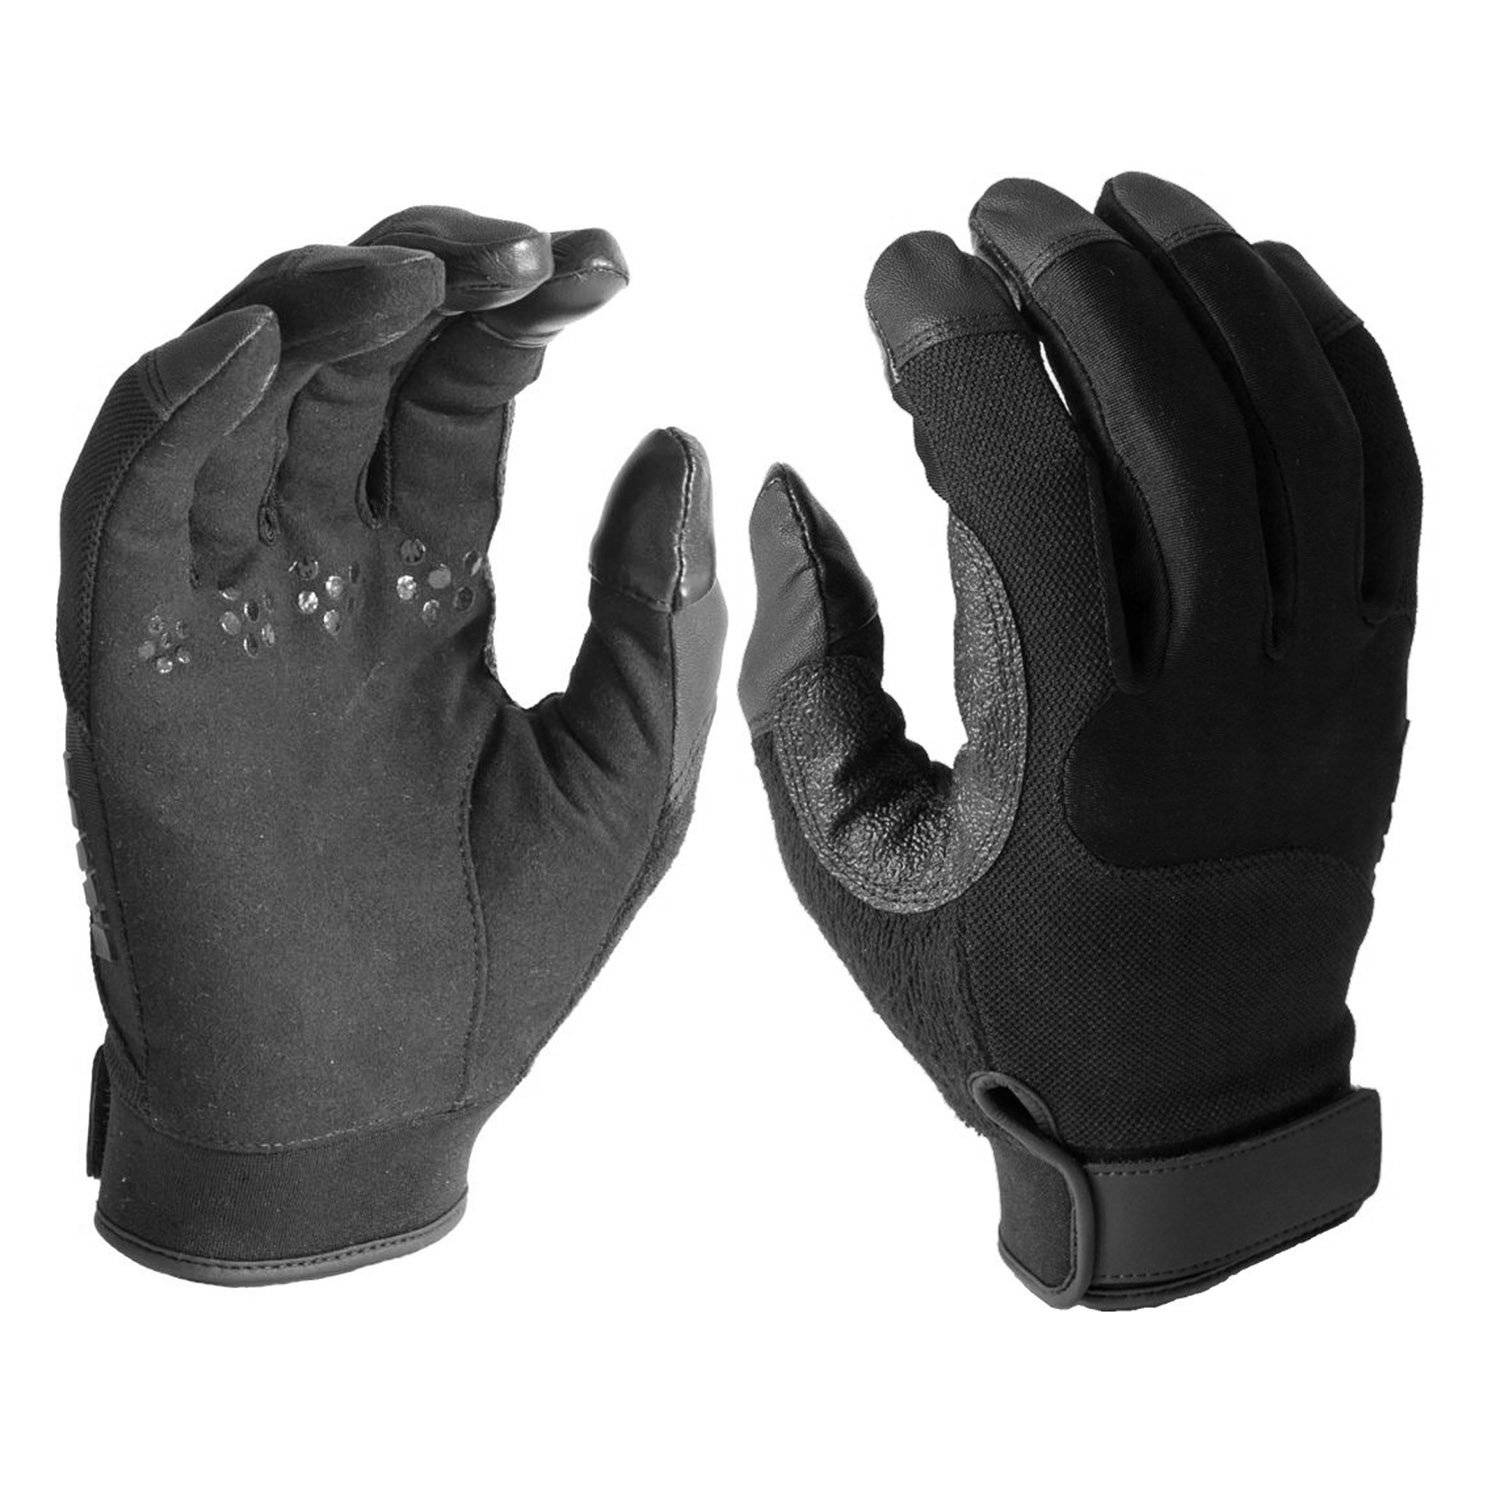 HWI Gear Cut Resistant Touchscreen Gloves